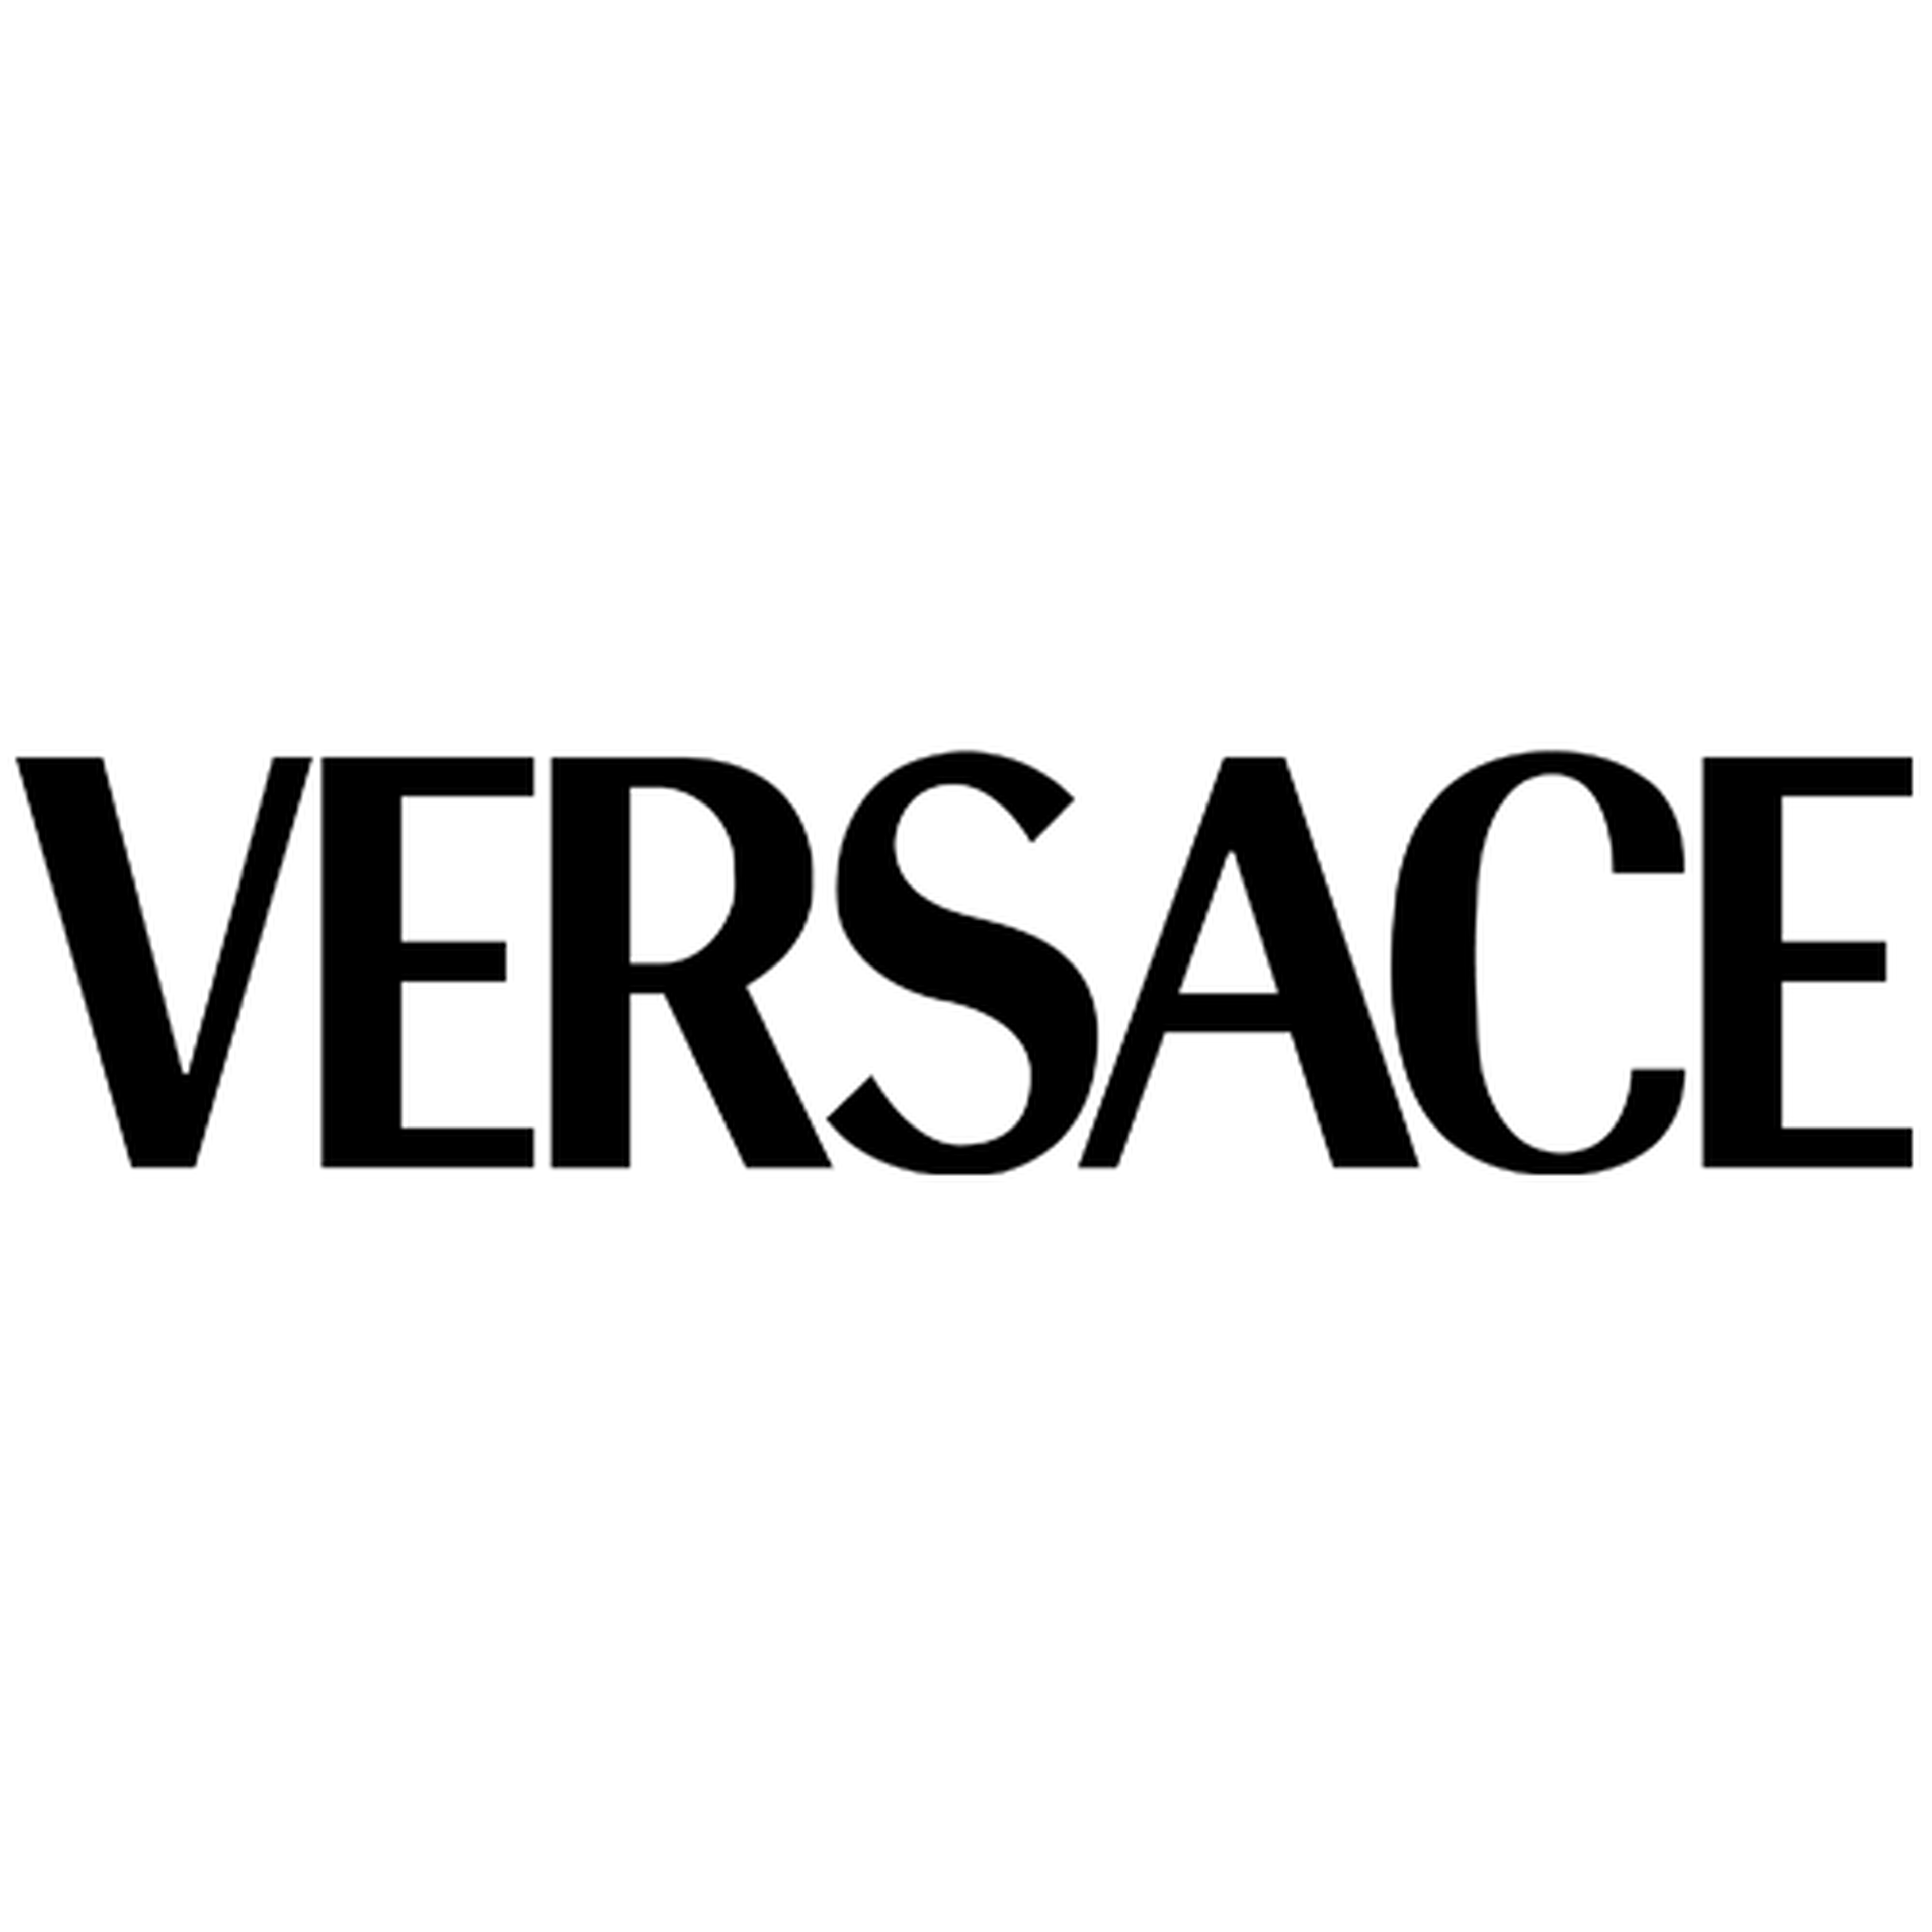 Versace logotype